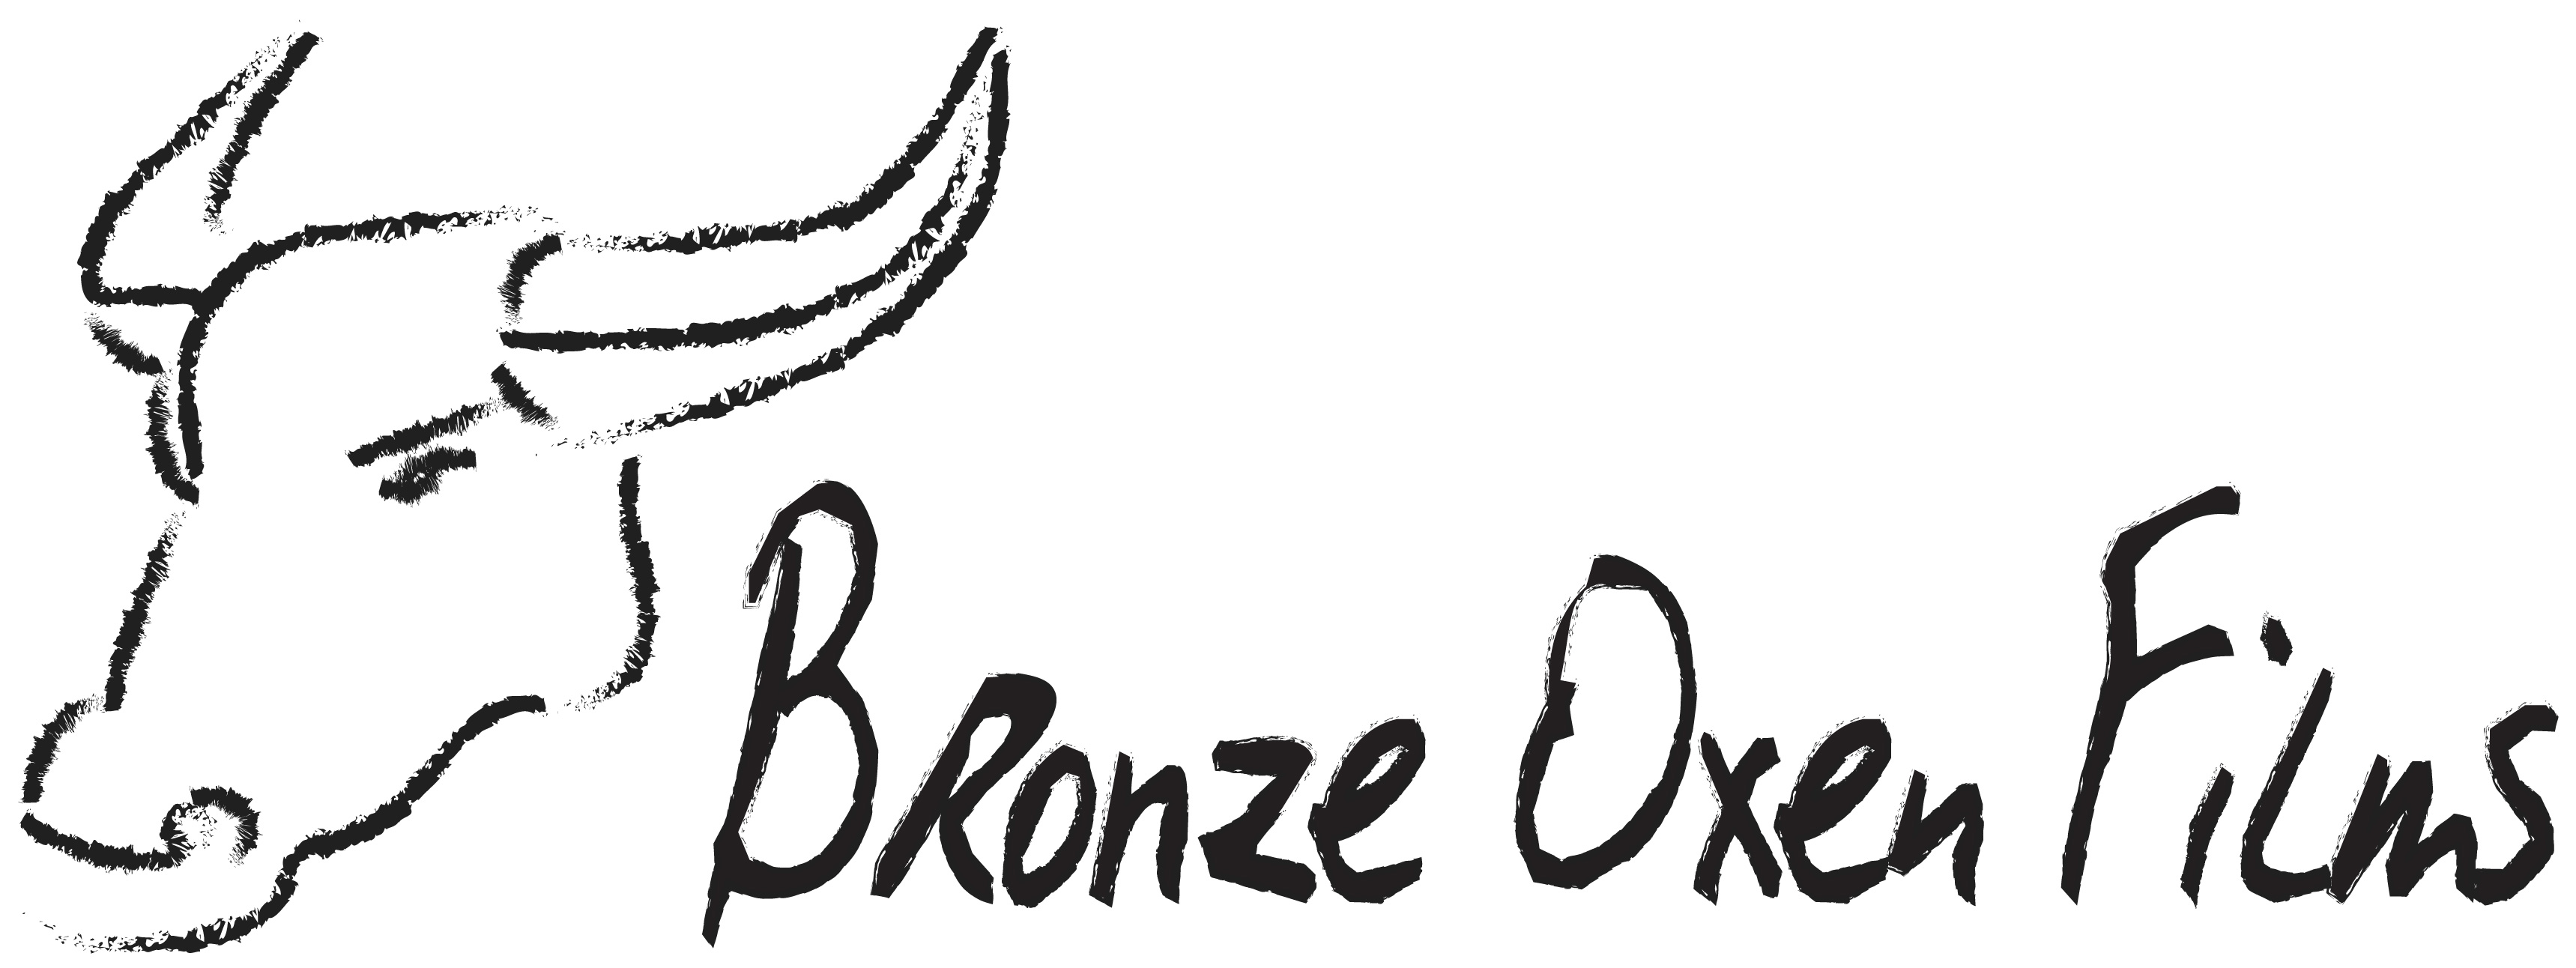 Bronze Oxen Films Logo